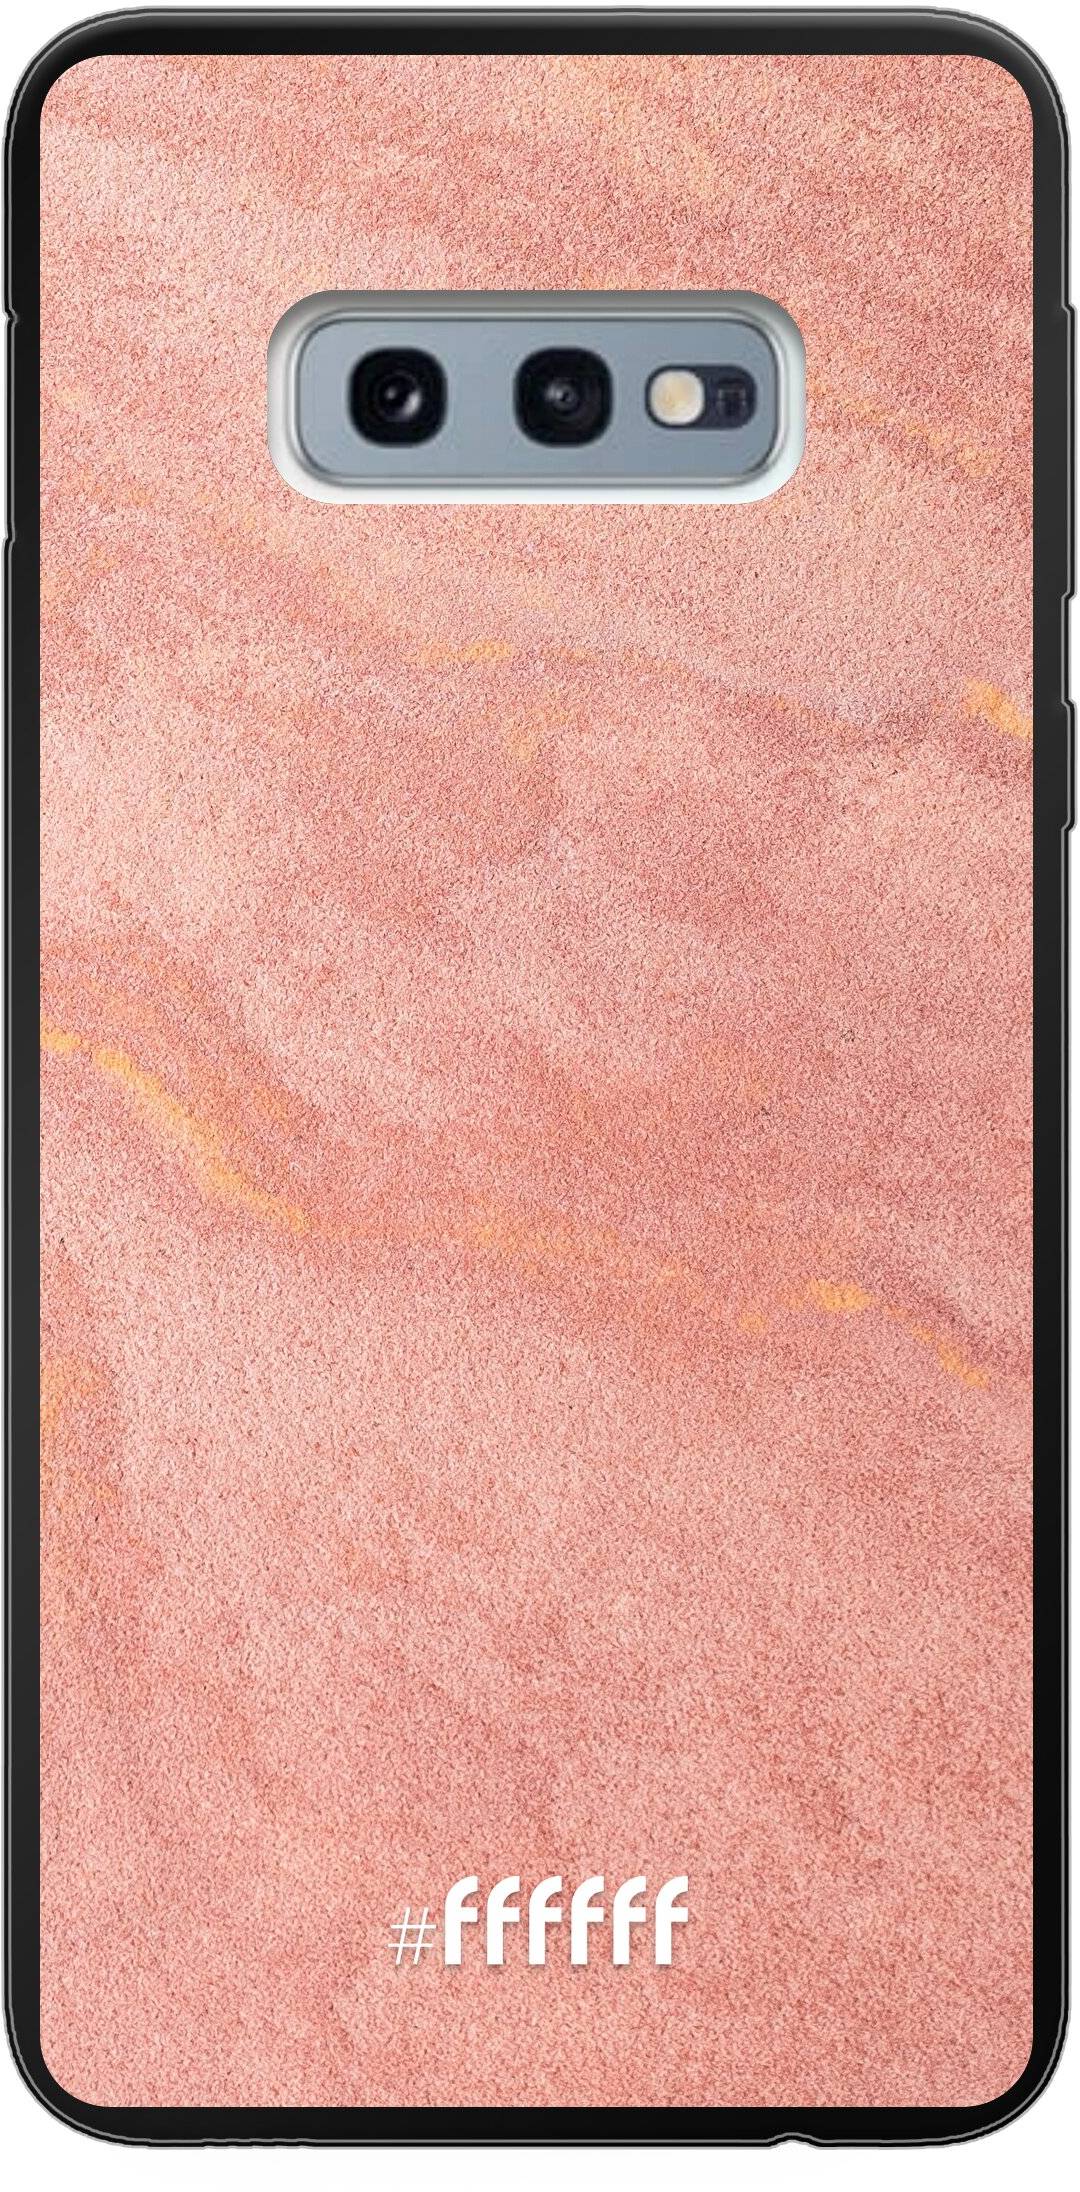 Sandy Pink Galaxy S10e